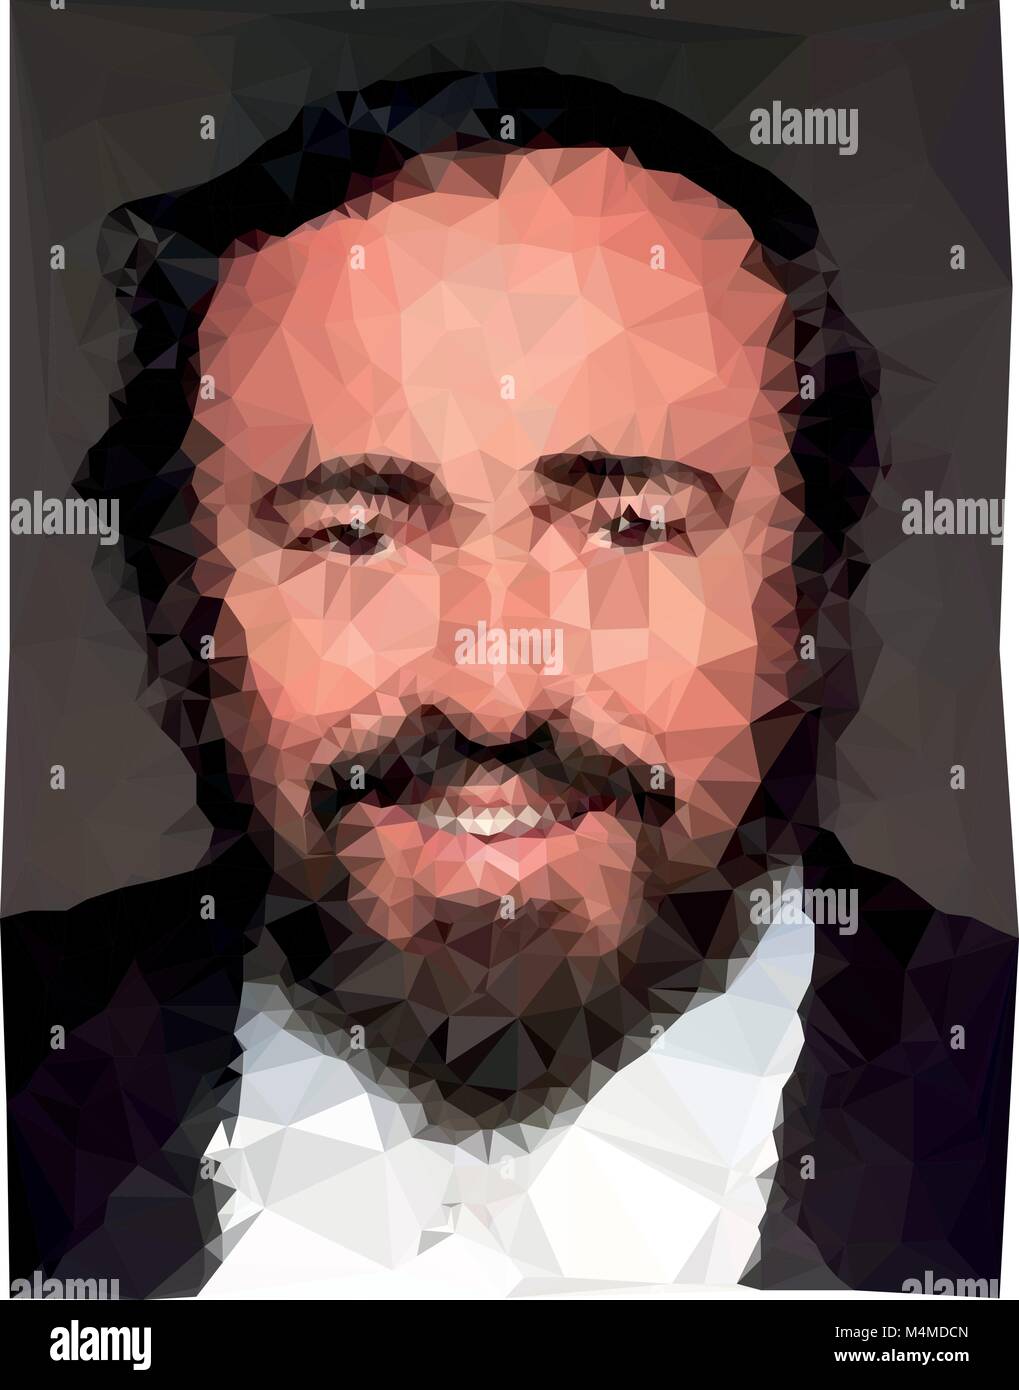 Luciano Pavarotti singer polygonal portrait illustration Stock Vector